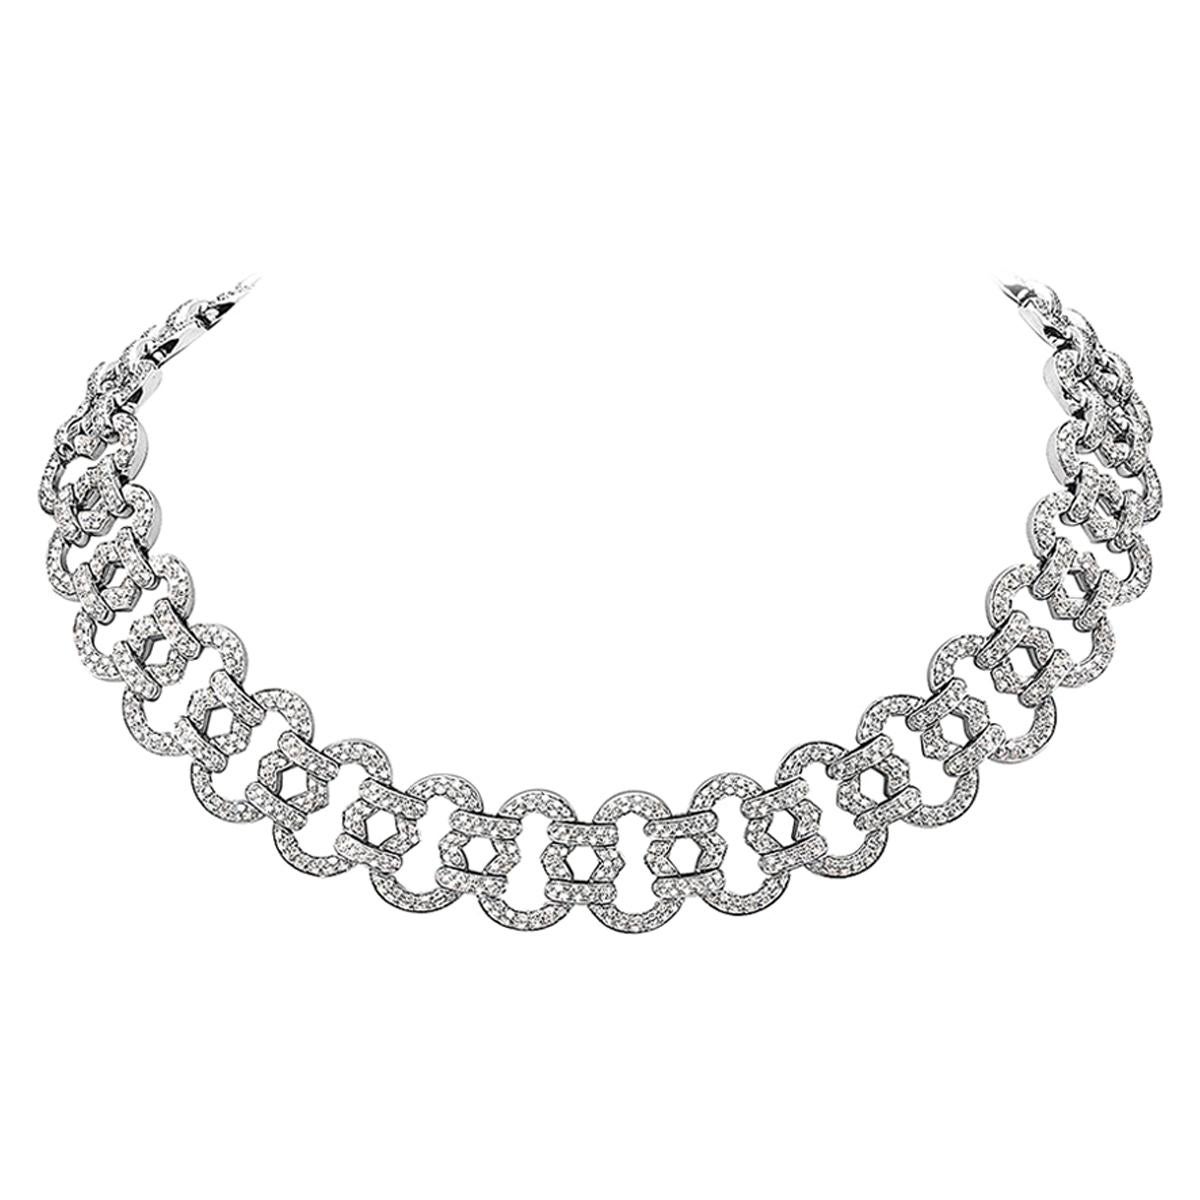 11.32 Carat Diamond and 18 Karat White Gold Chain Collar Necklace